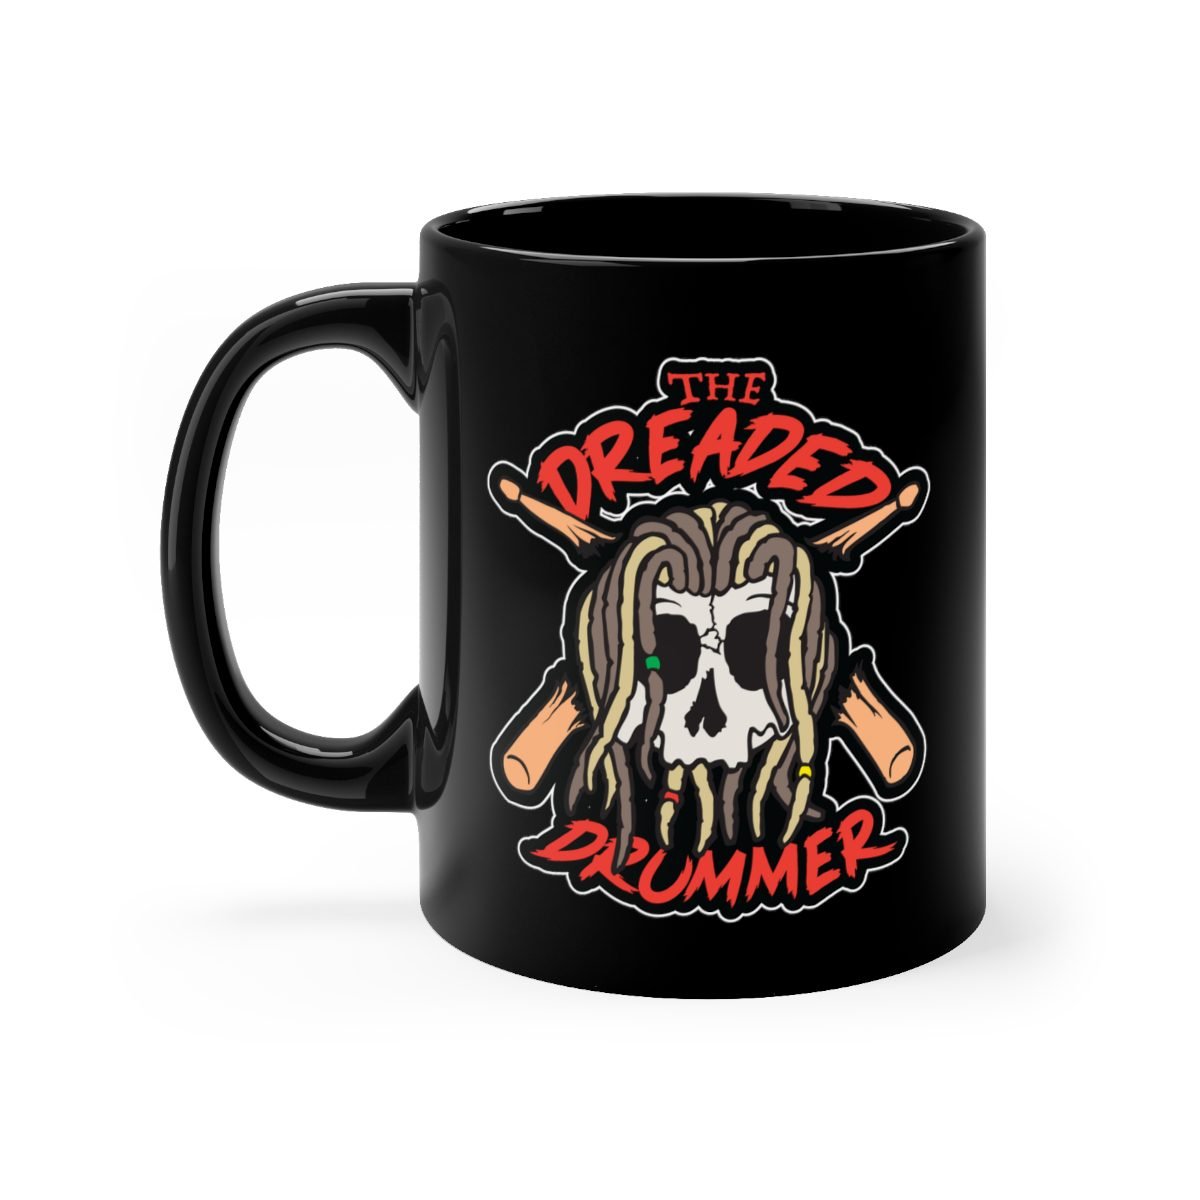 The Dreaded Drummer 11oz Black mug